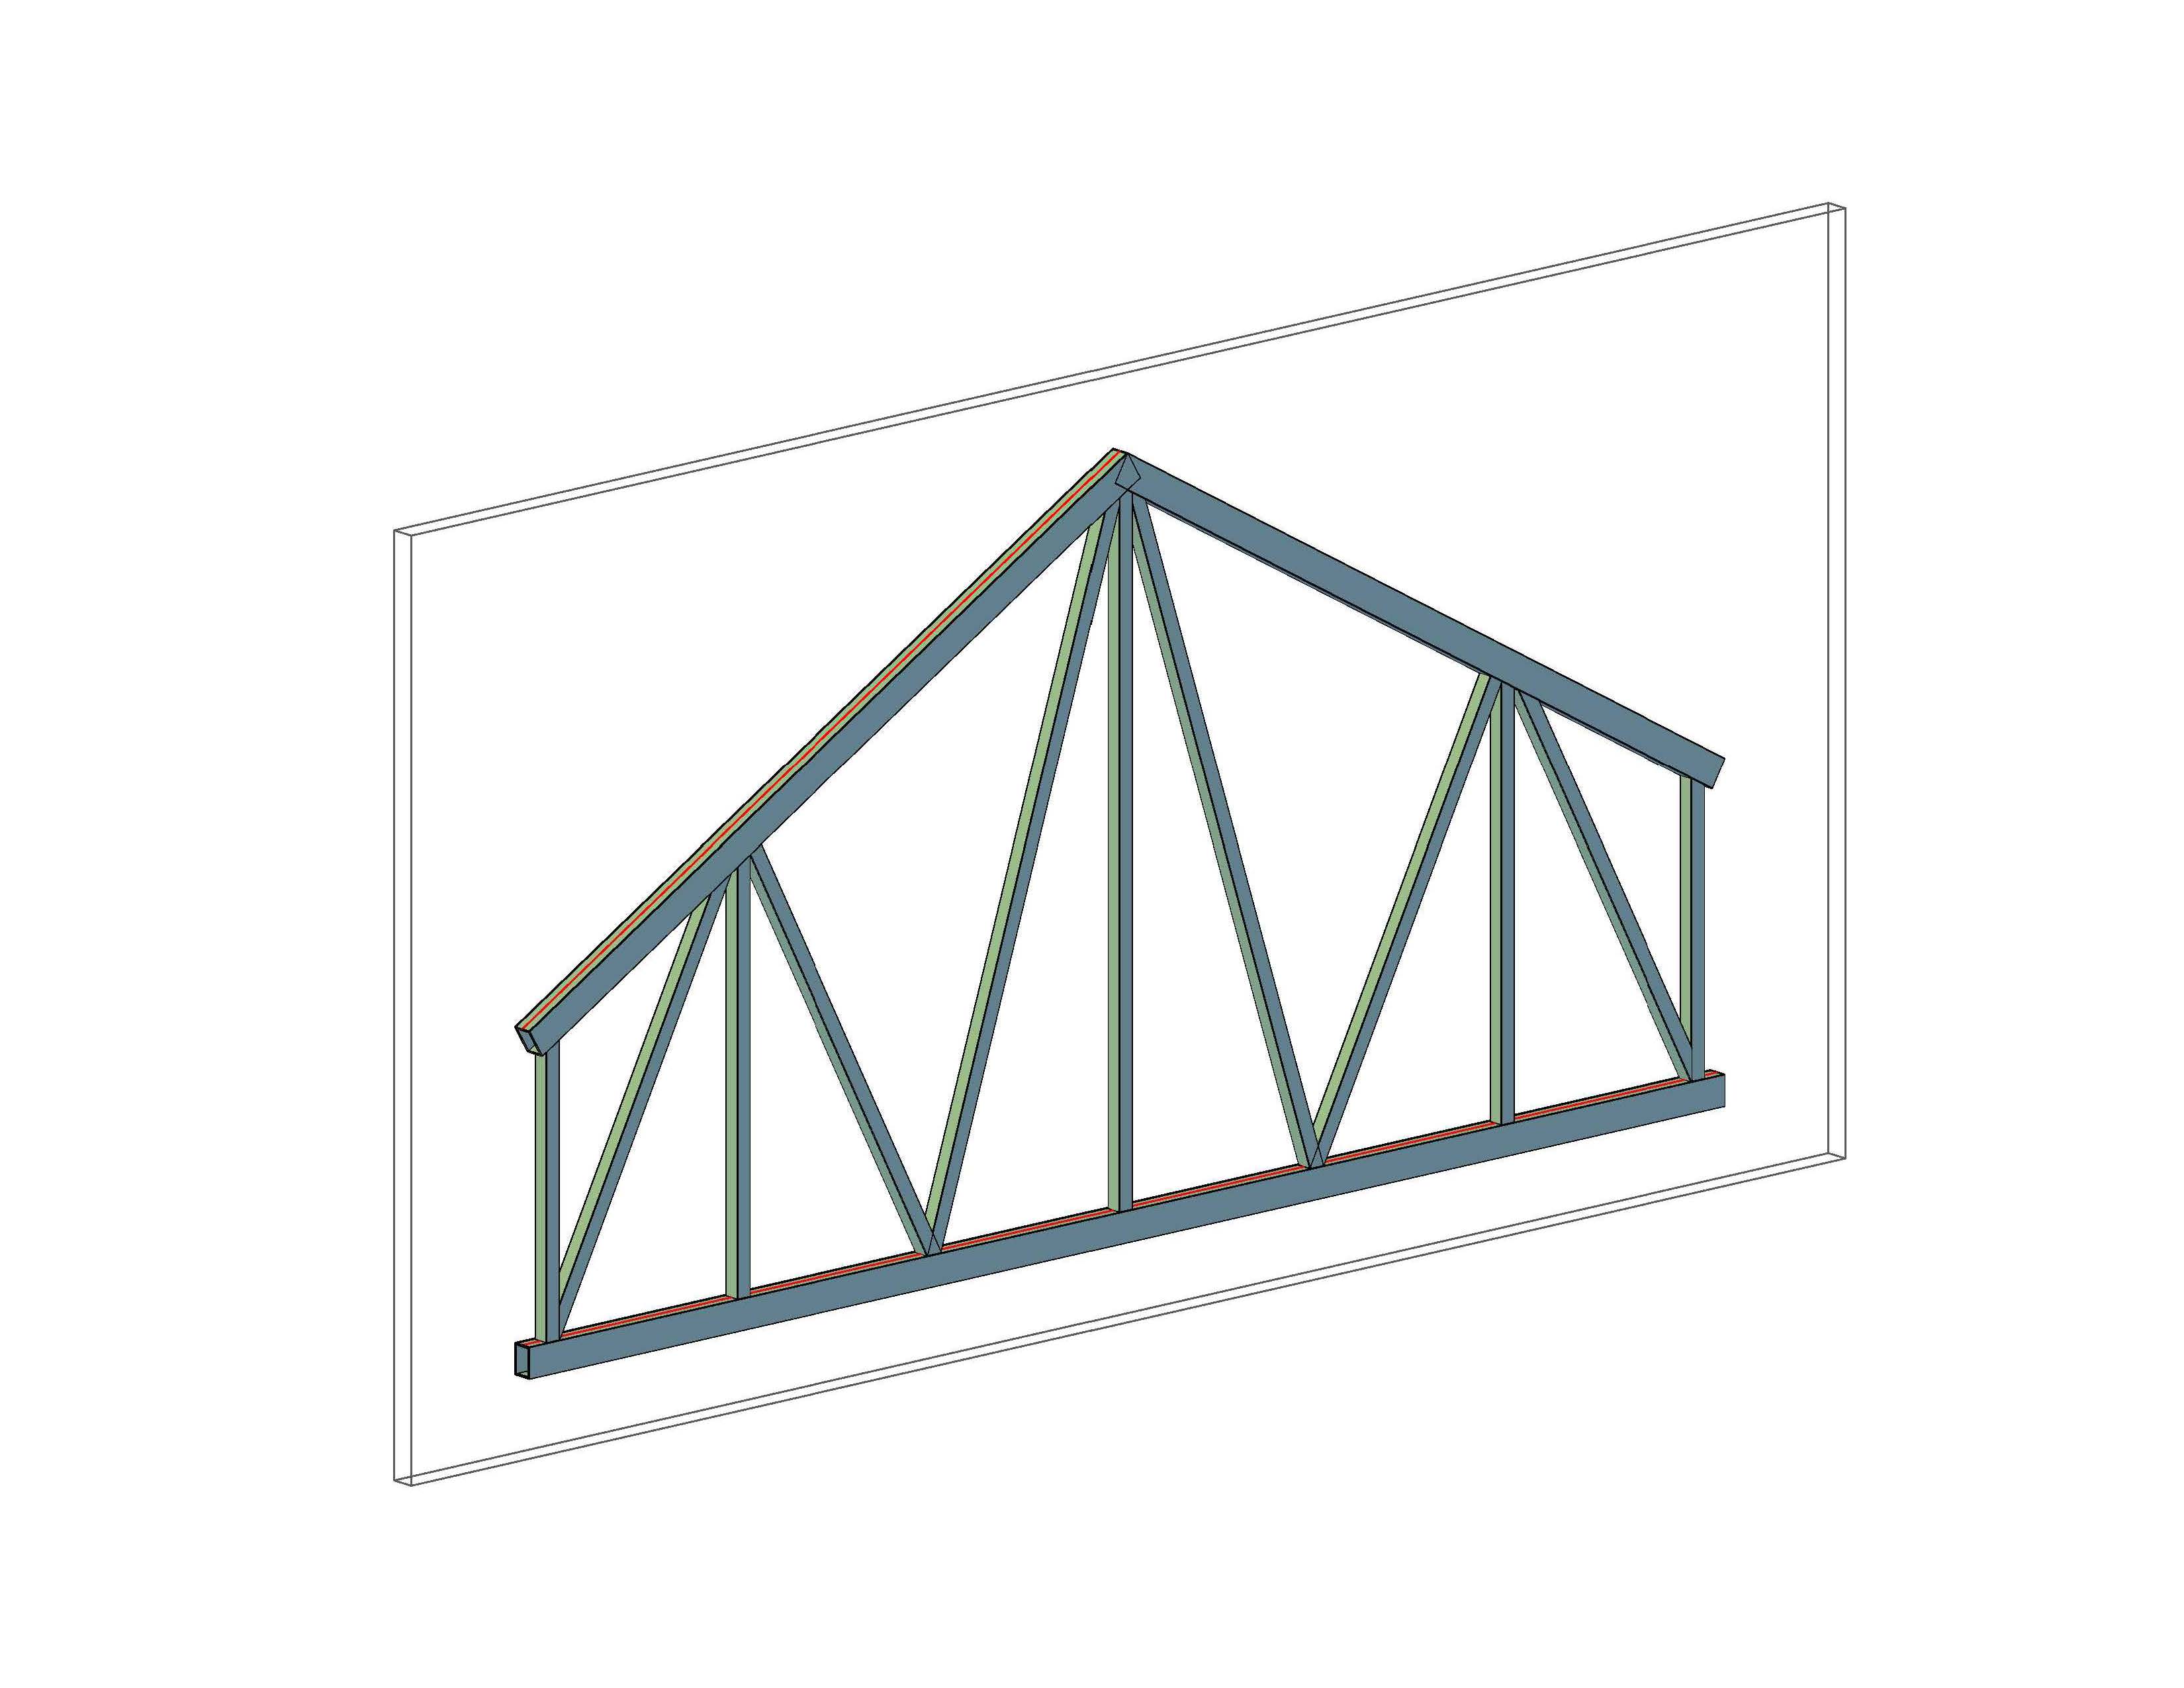 truss example 7-20-14.jpg